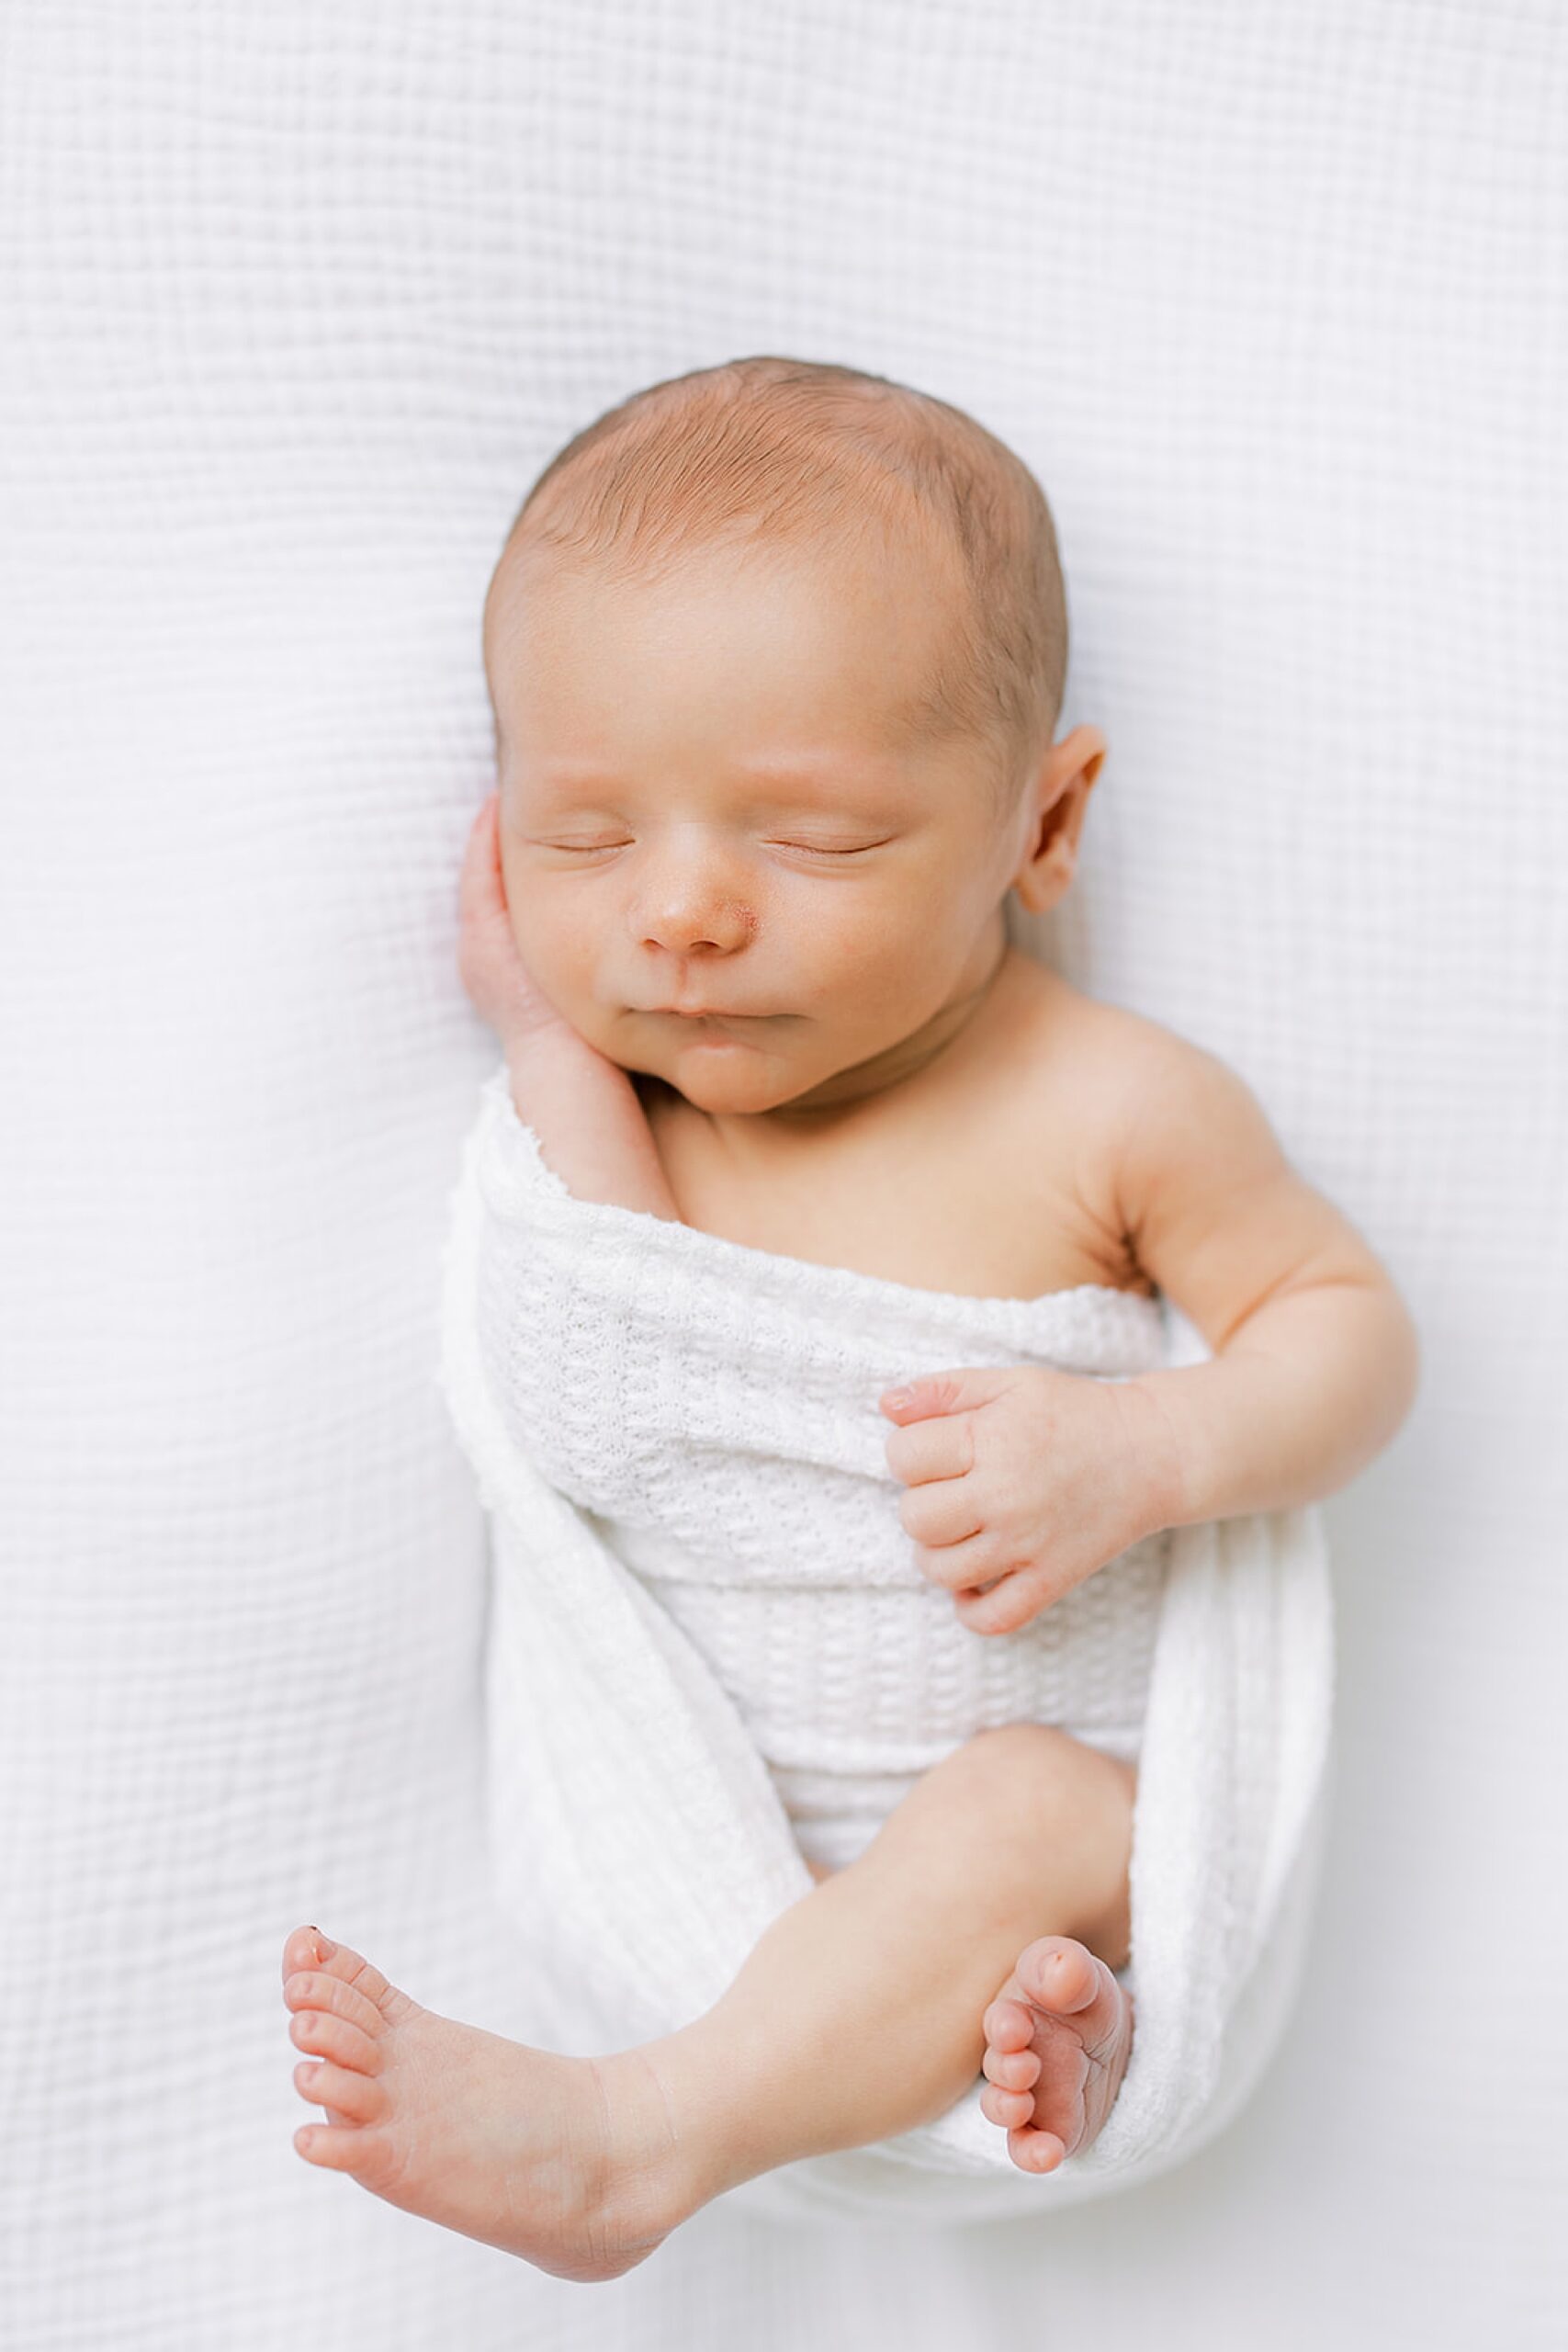 baby boy lays sleeping in white wrap during newborn photos 